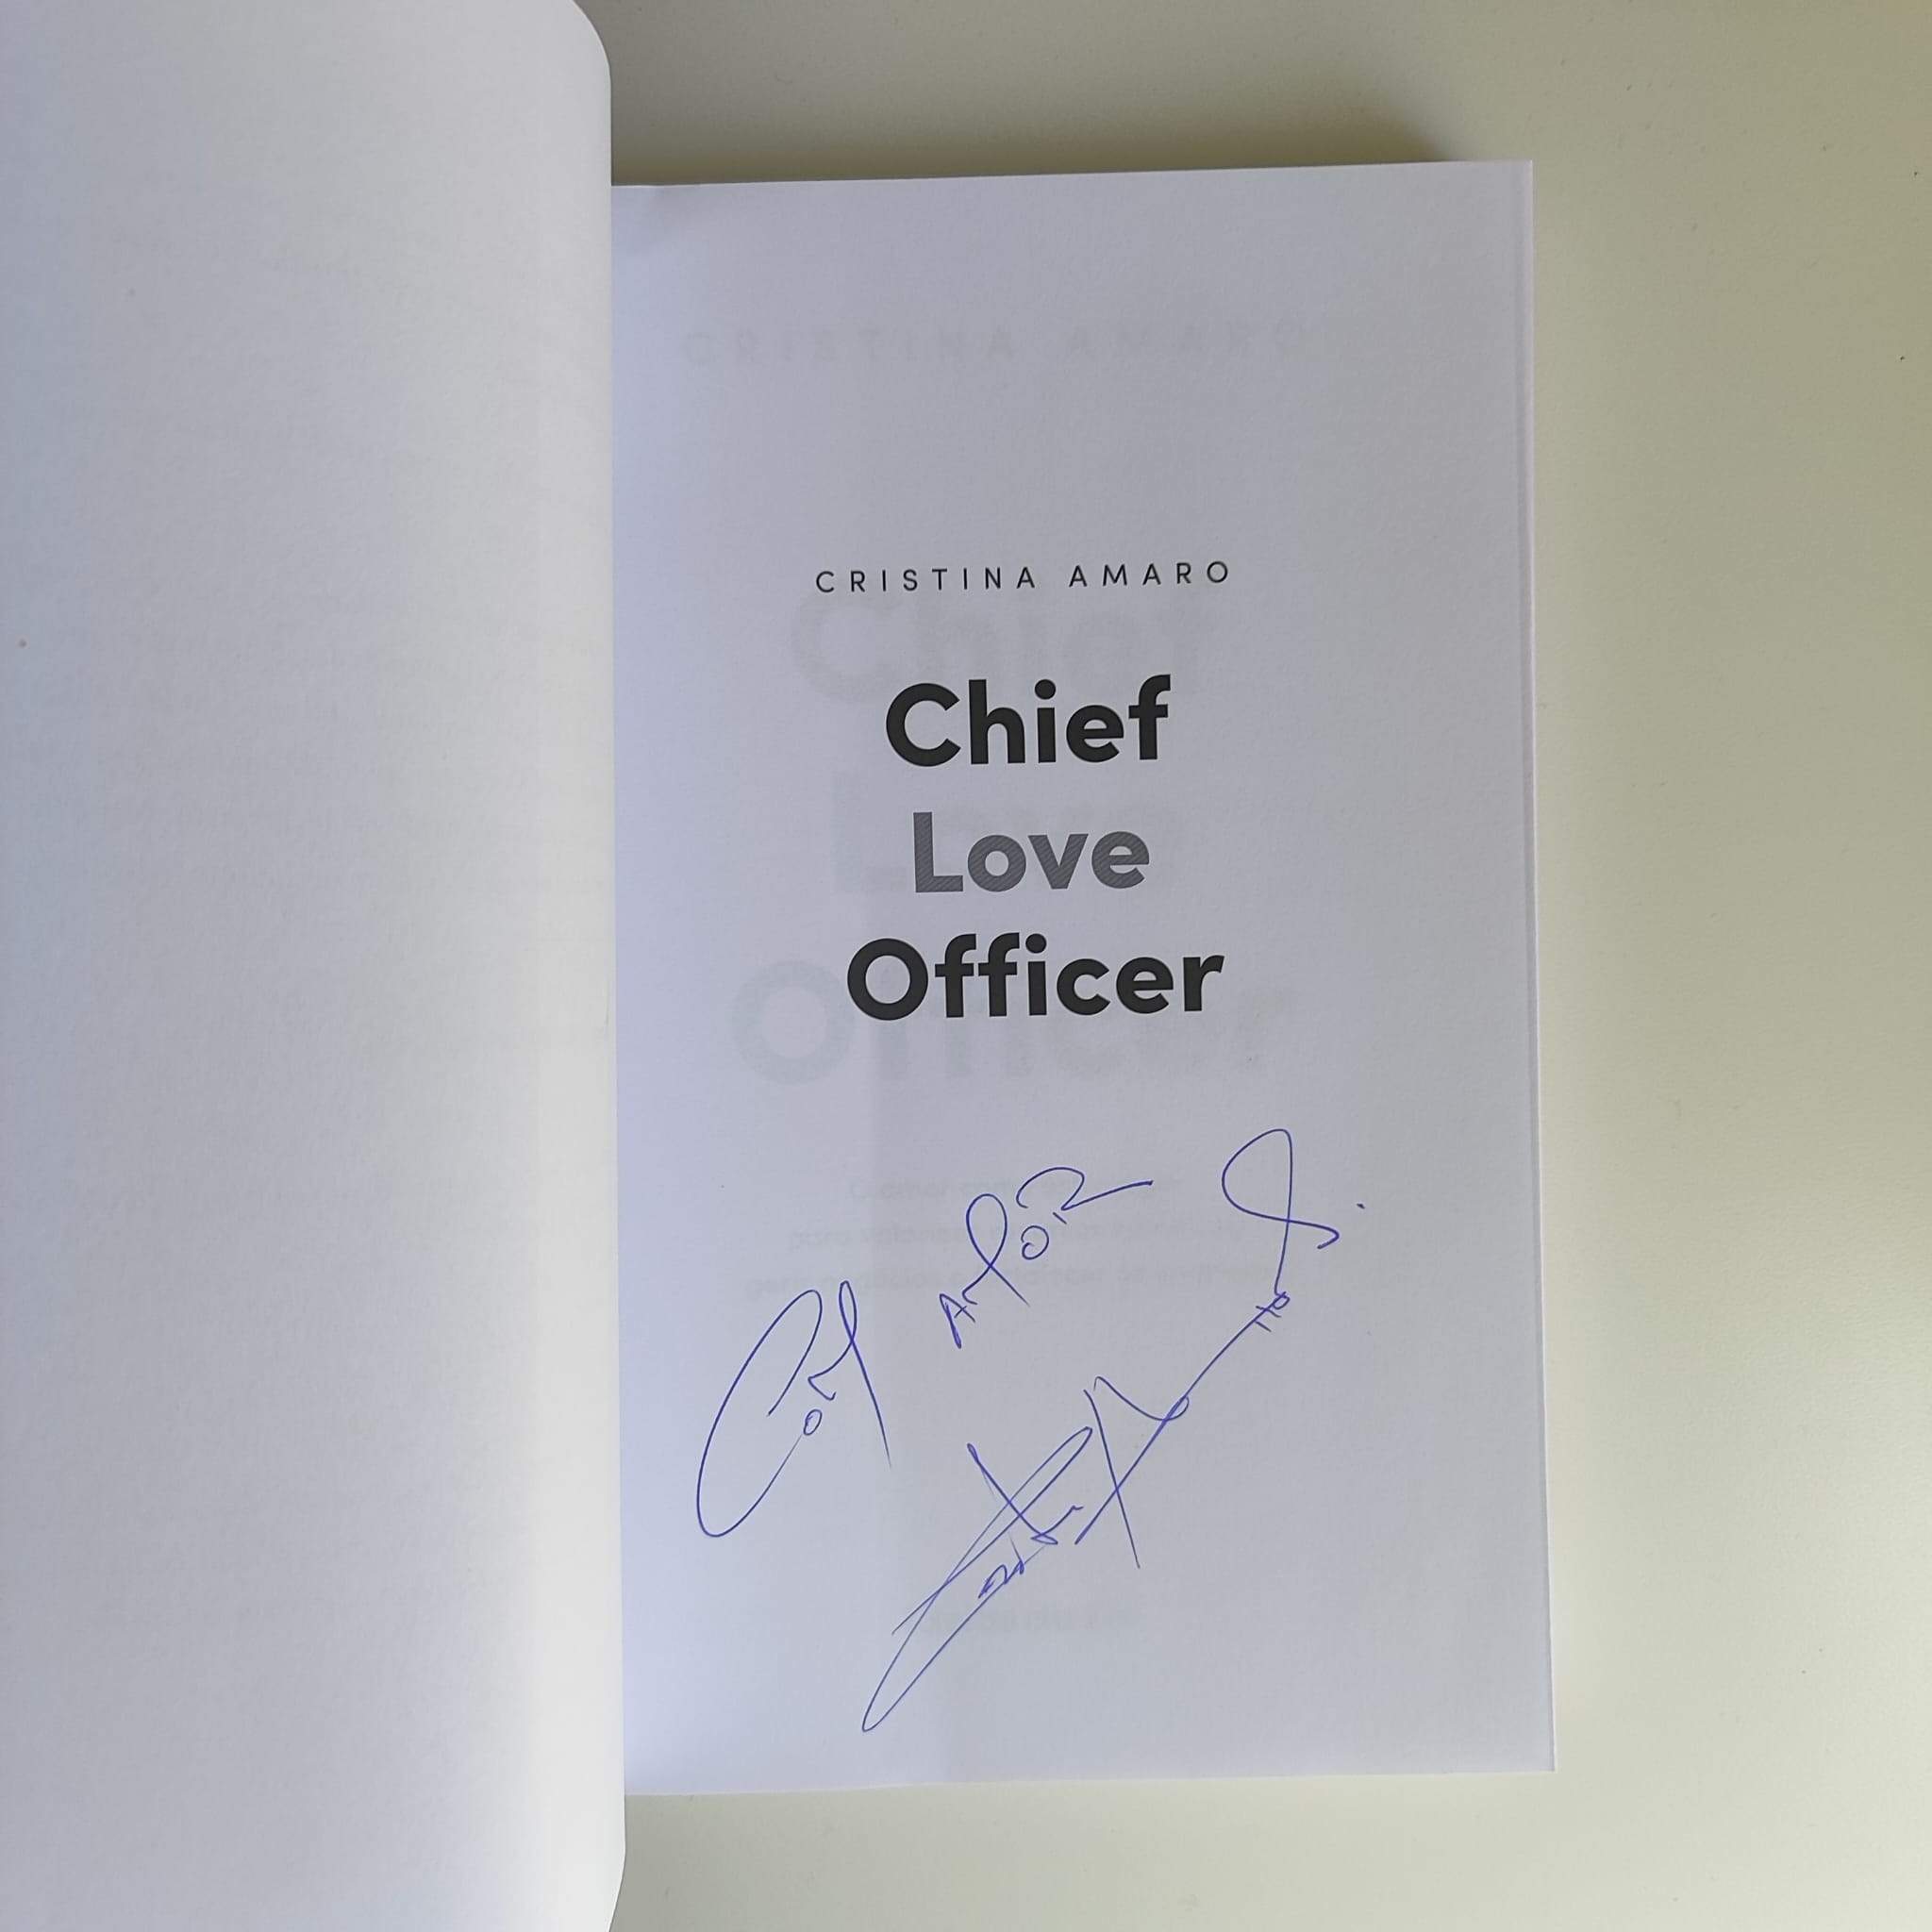 Chief Love Officer, de Cristina Amaro (via Porto Editora)